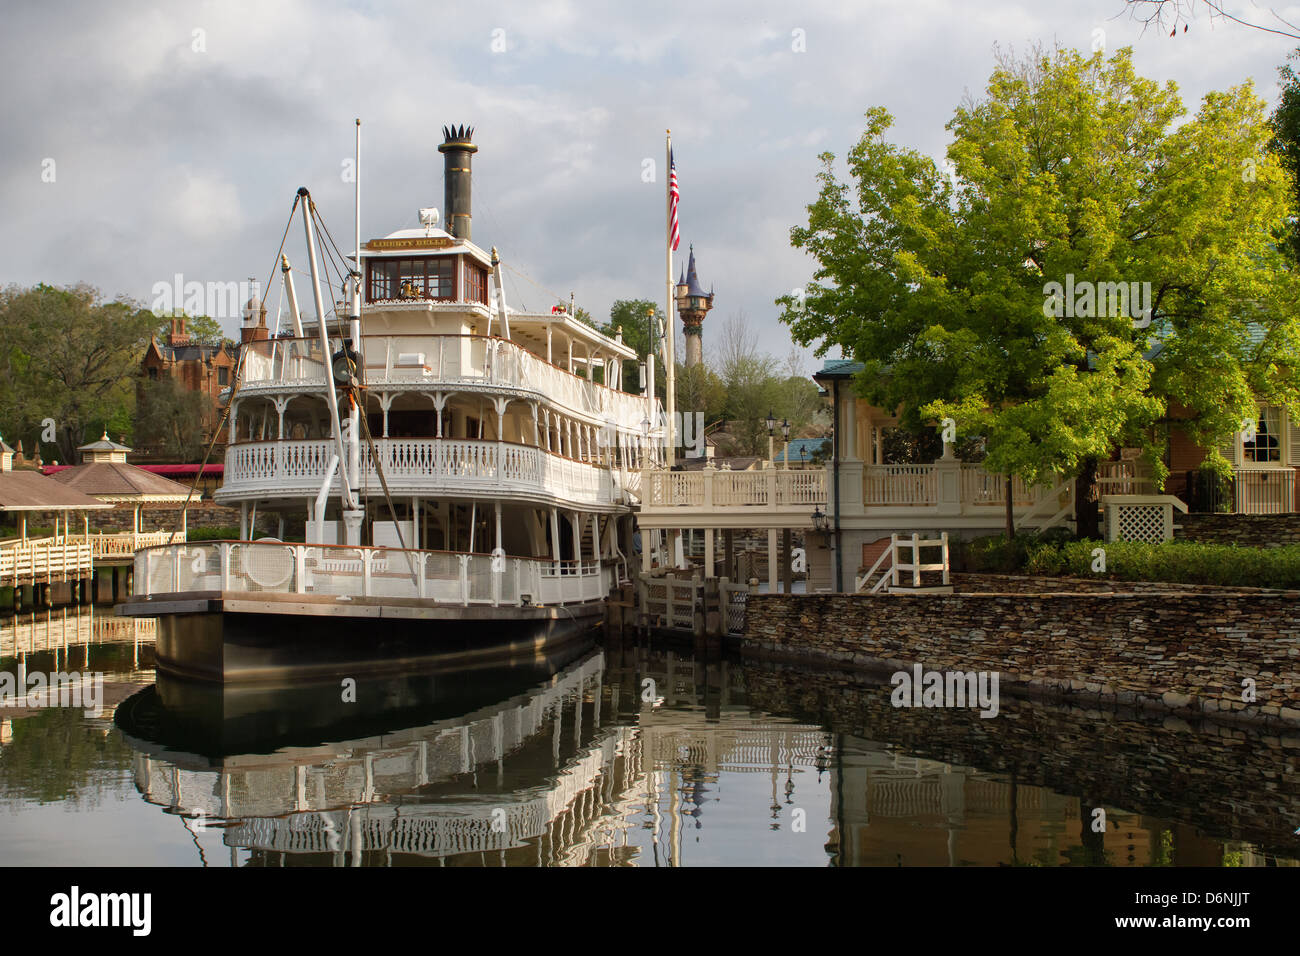 Liberty Square Riverboat in Magic Kingdom, Walt Disney World resort, Orlando, Florida. Stock Photo